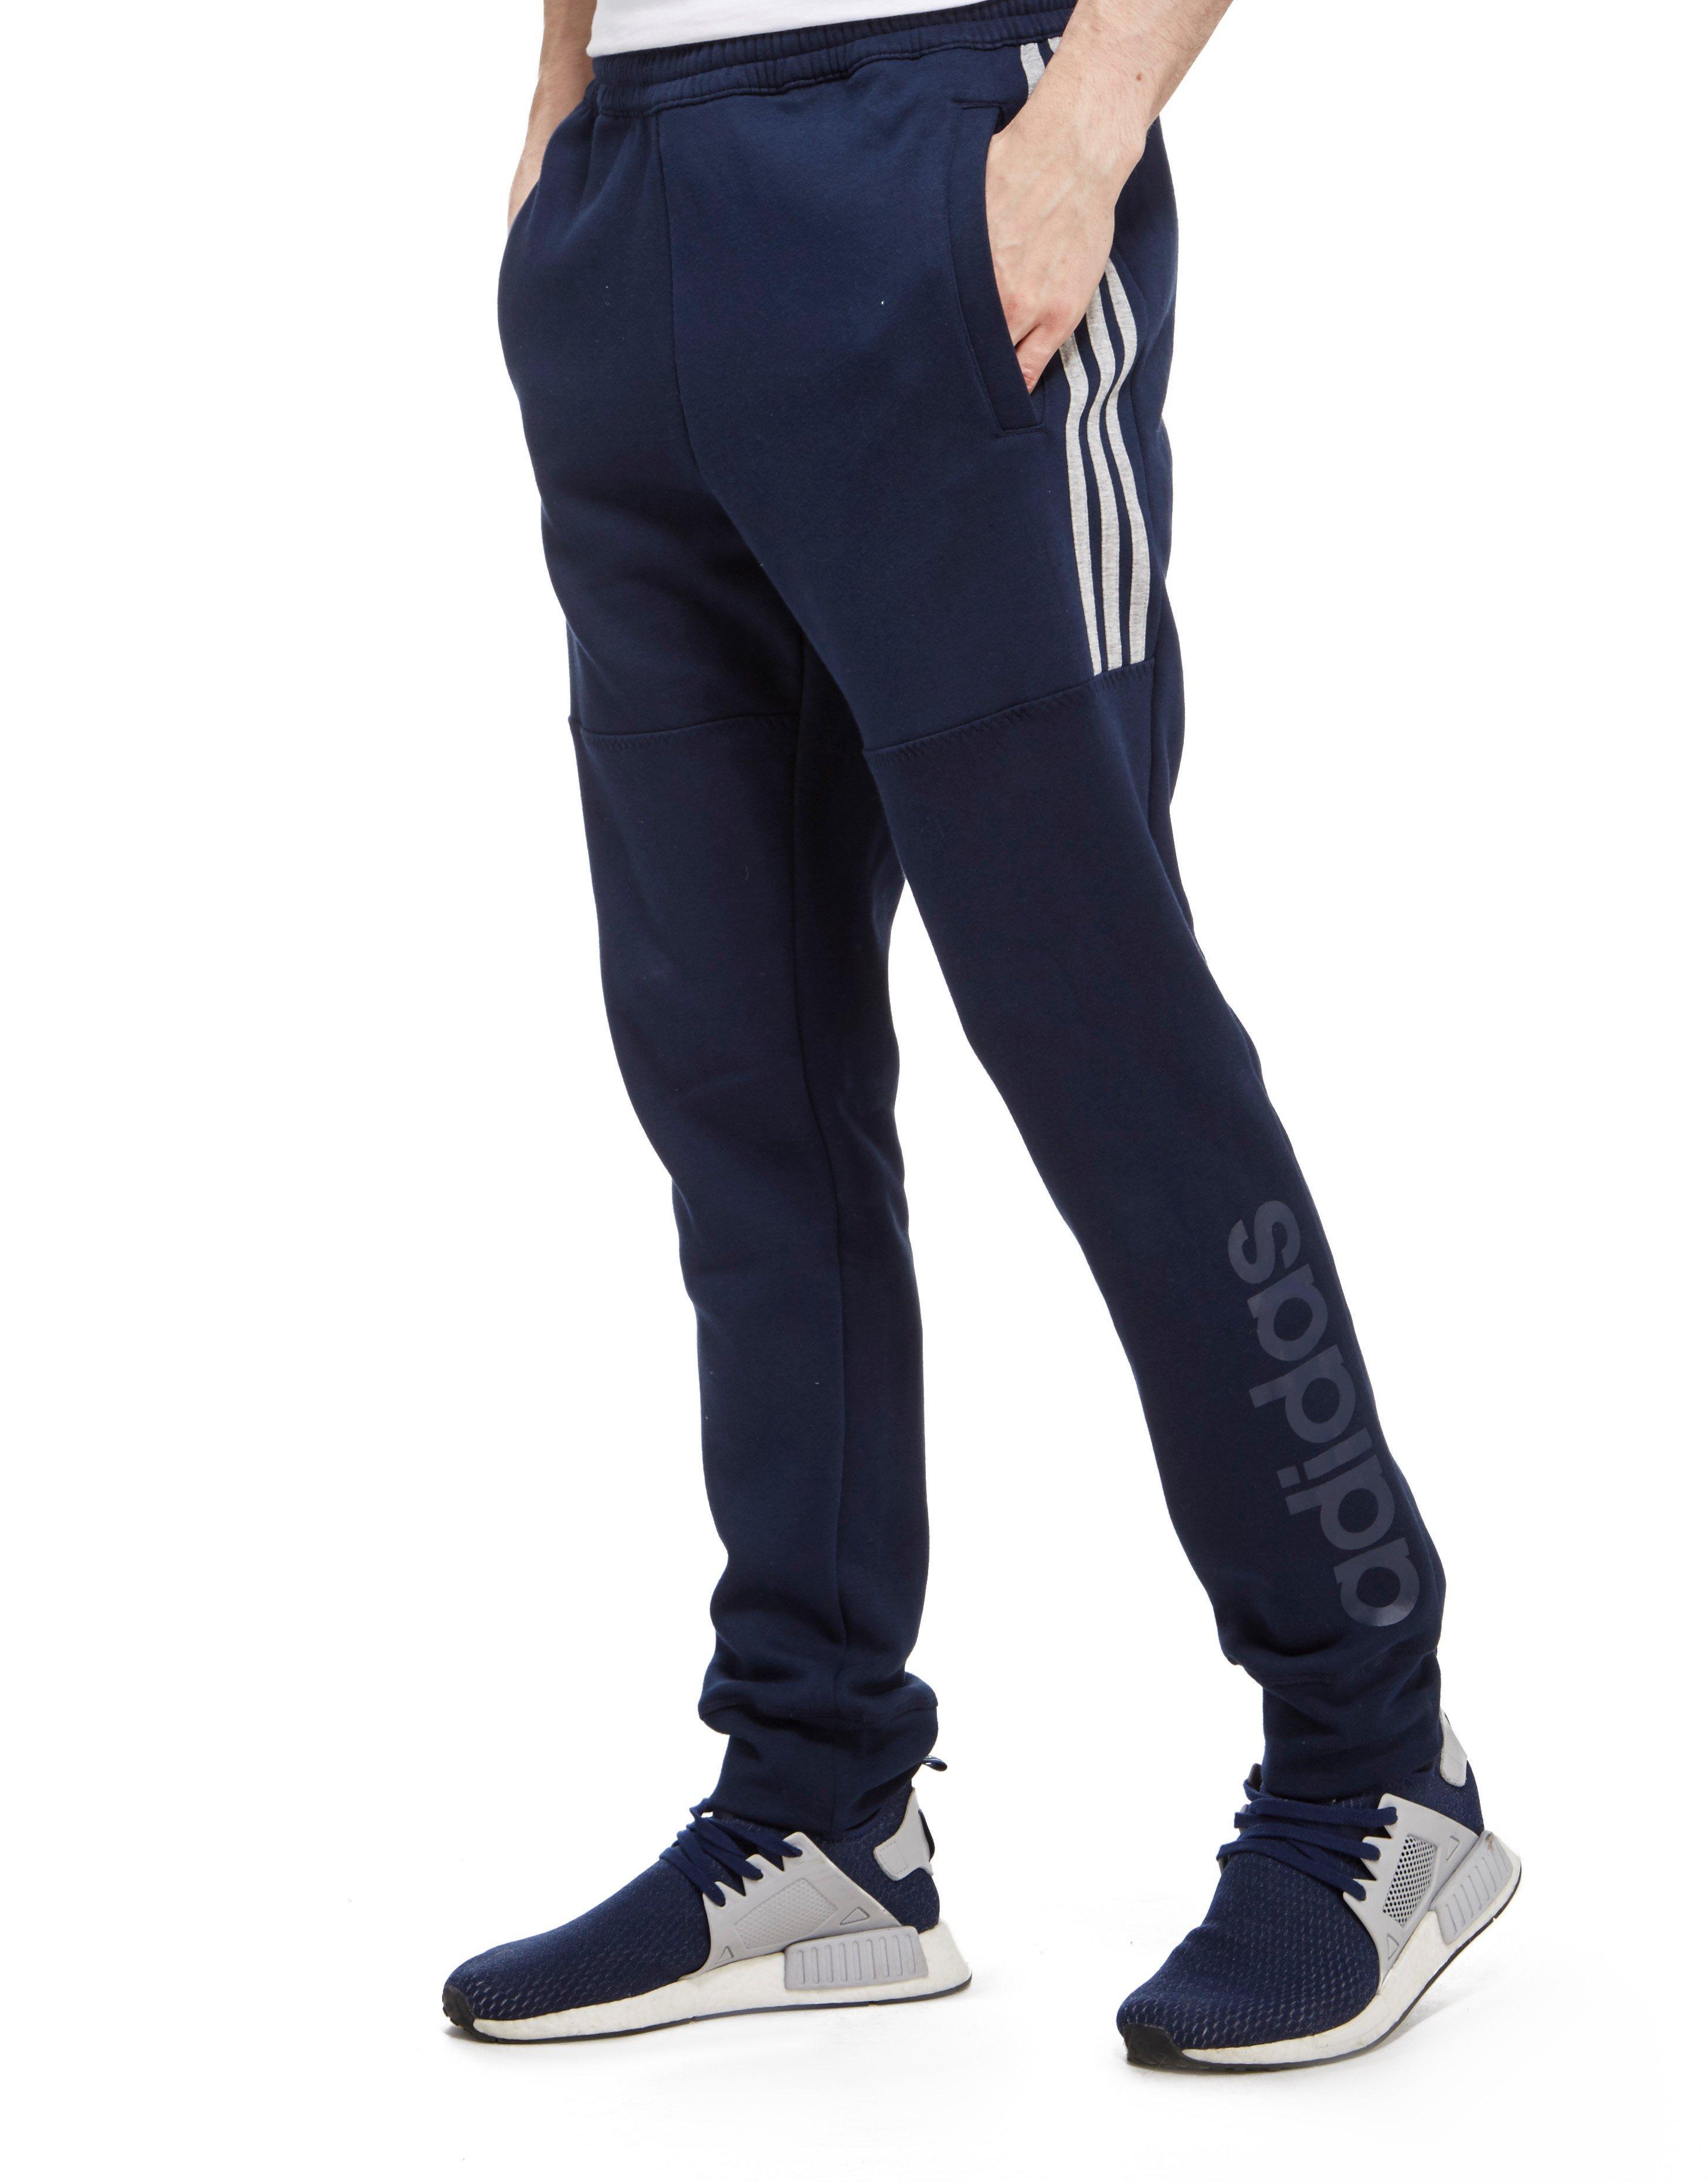 adidas Originals Linear Fleece Pants in Navy (Blue) for Men - Lyst